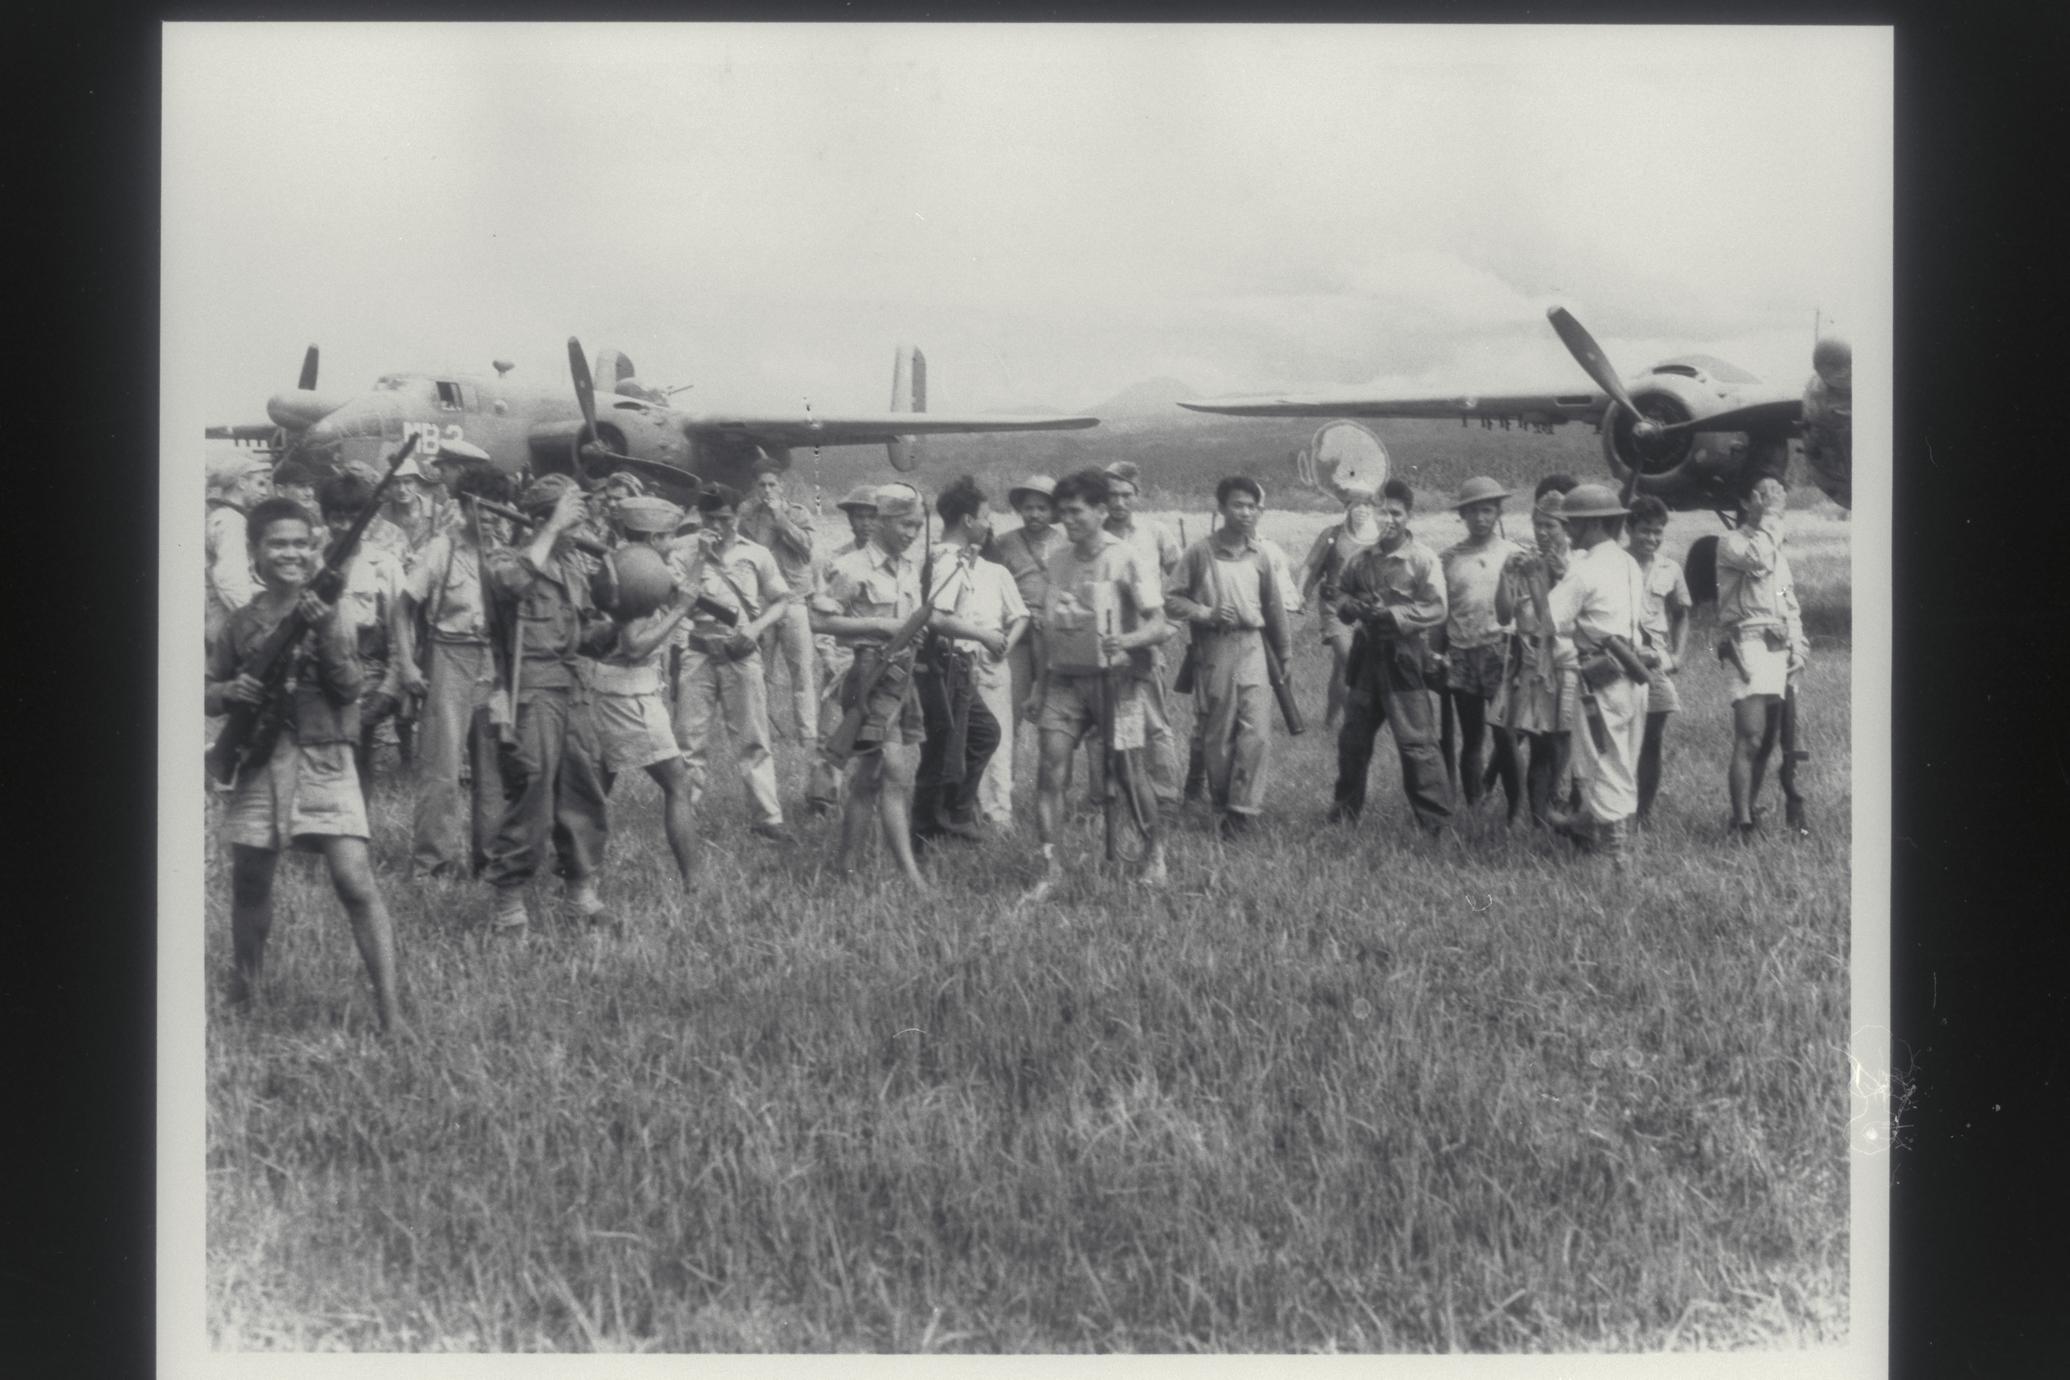 Guerrillas who fought the Japanese, Mindanao, 1945